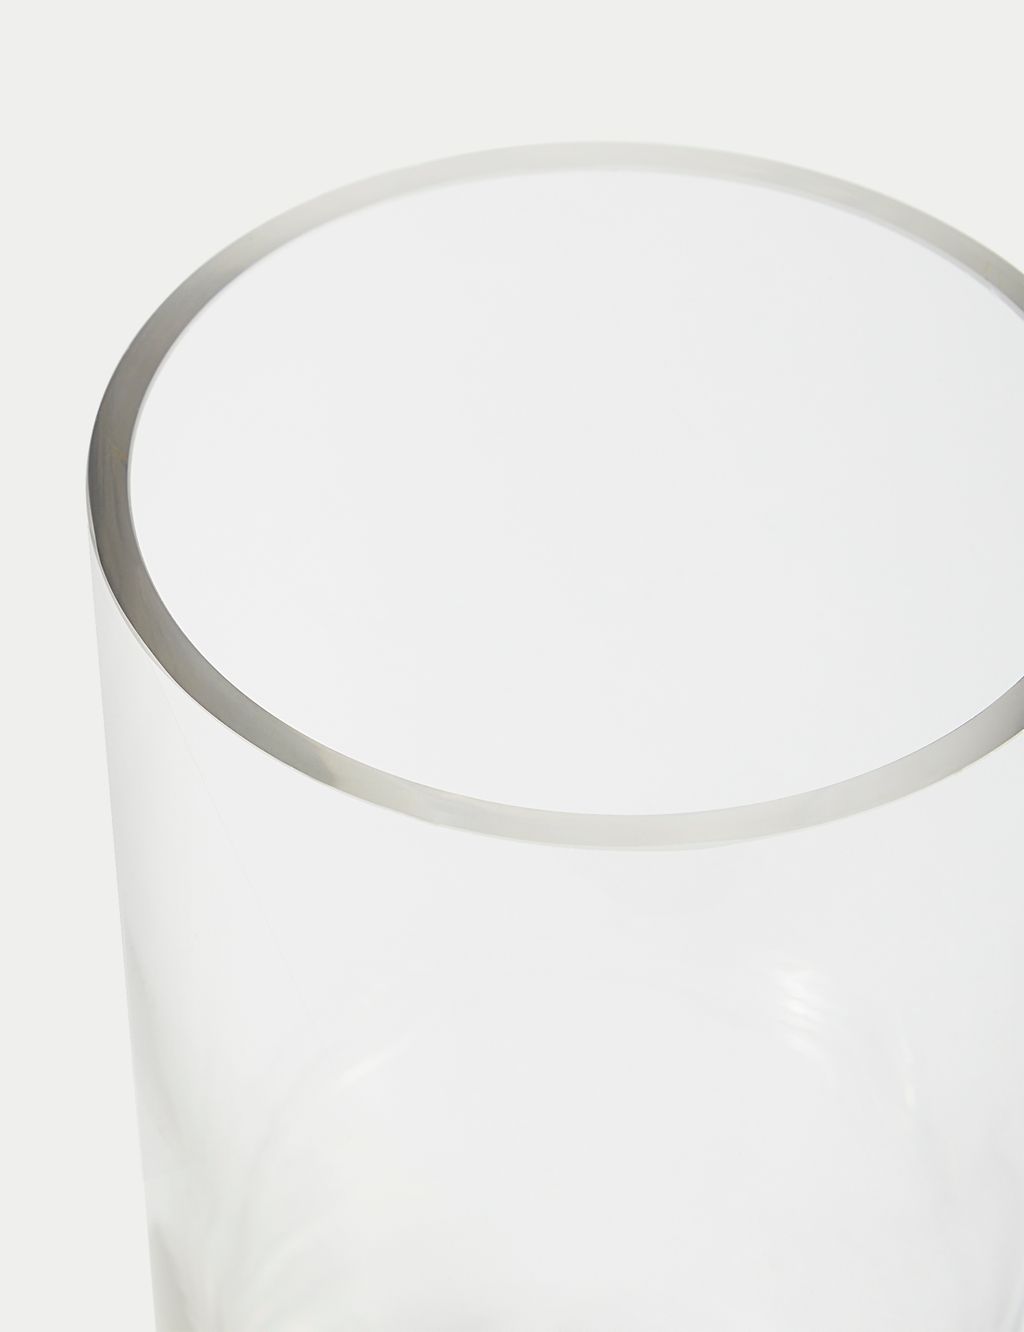 Medium Cylinder Vase 2 of 3